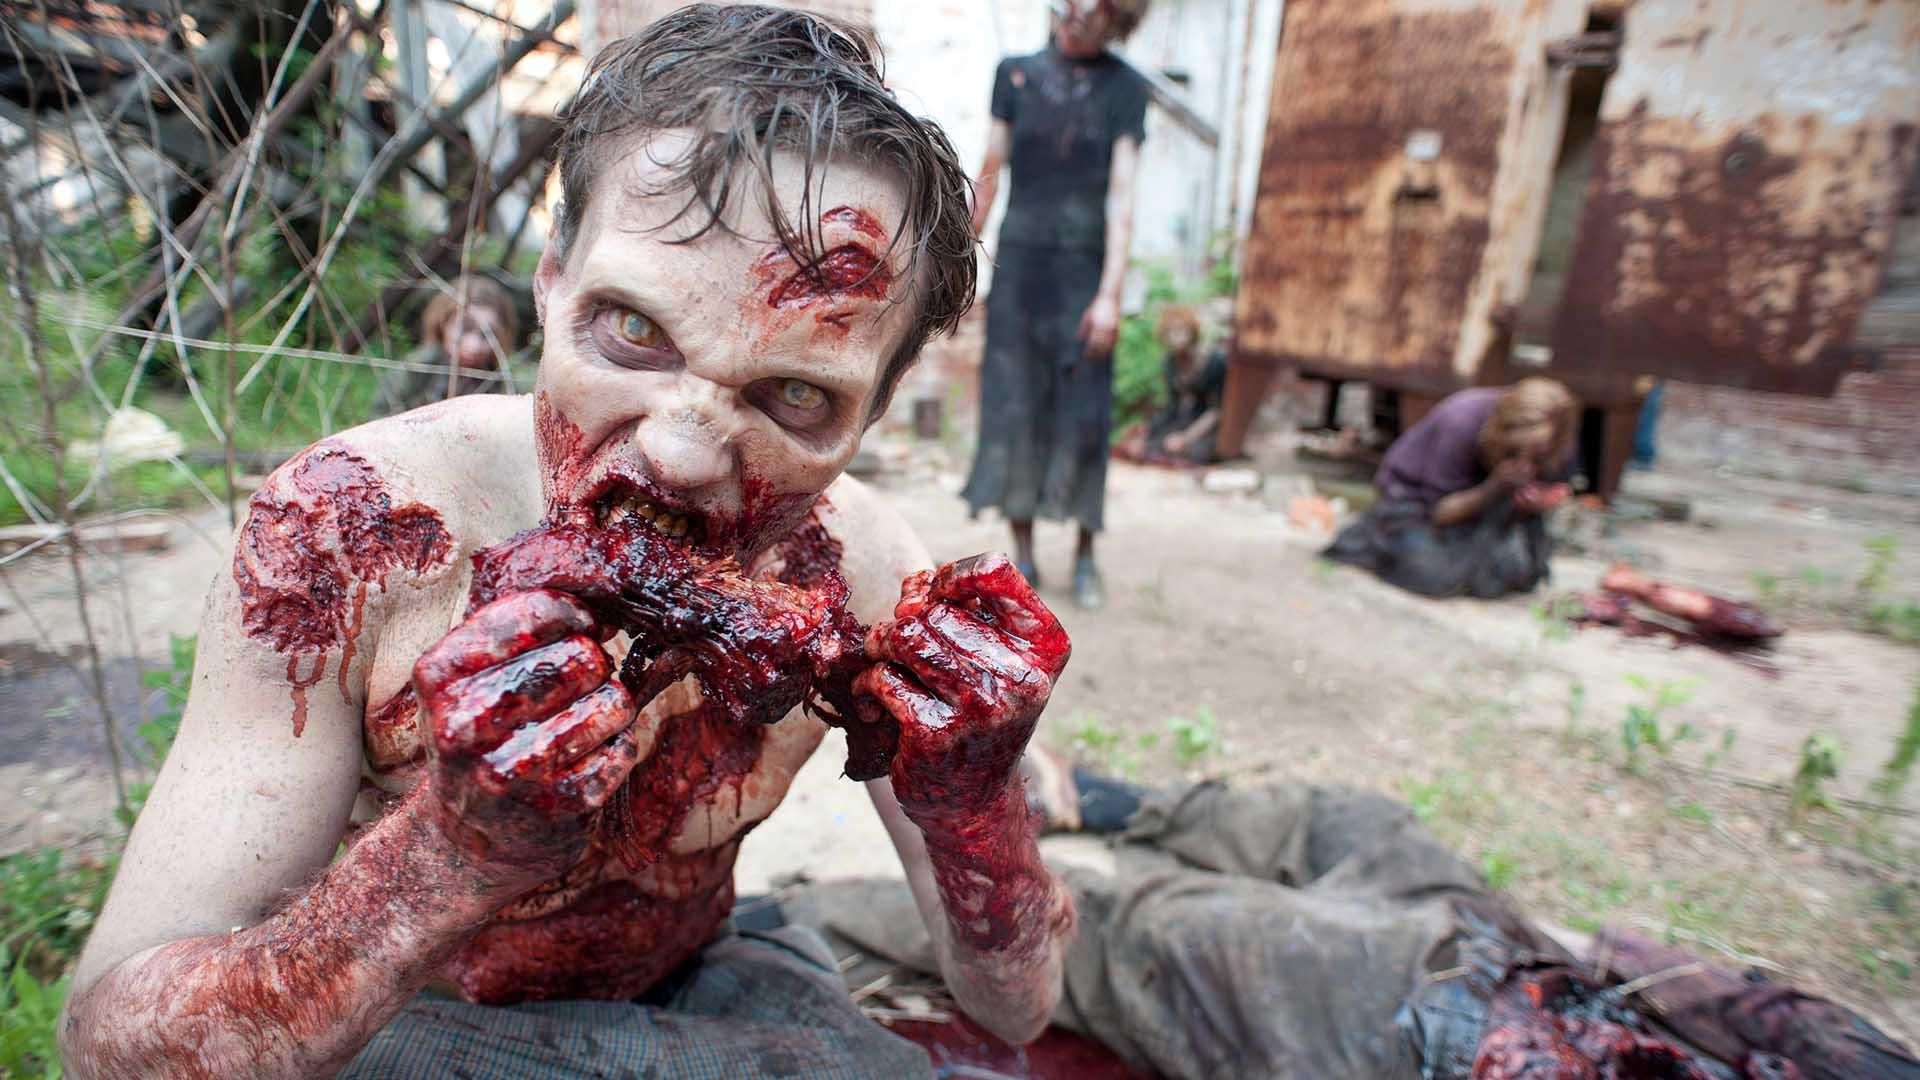 Zombie eating human flesh